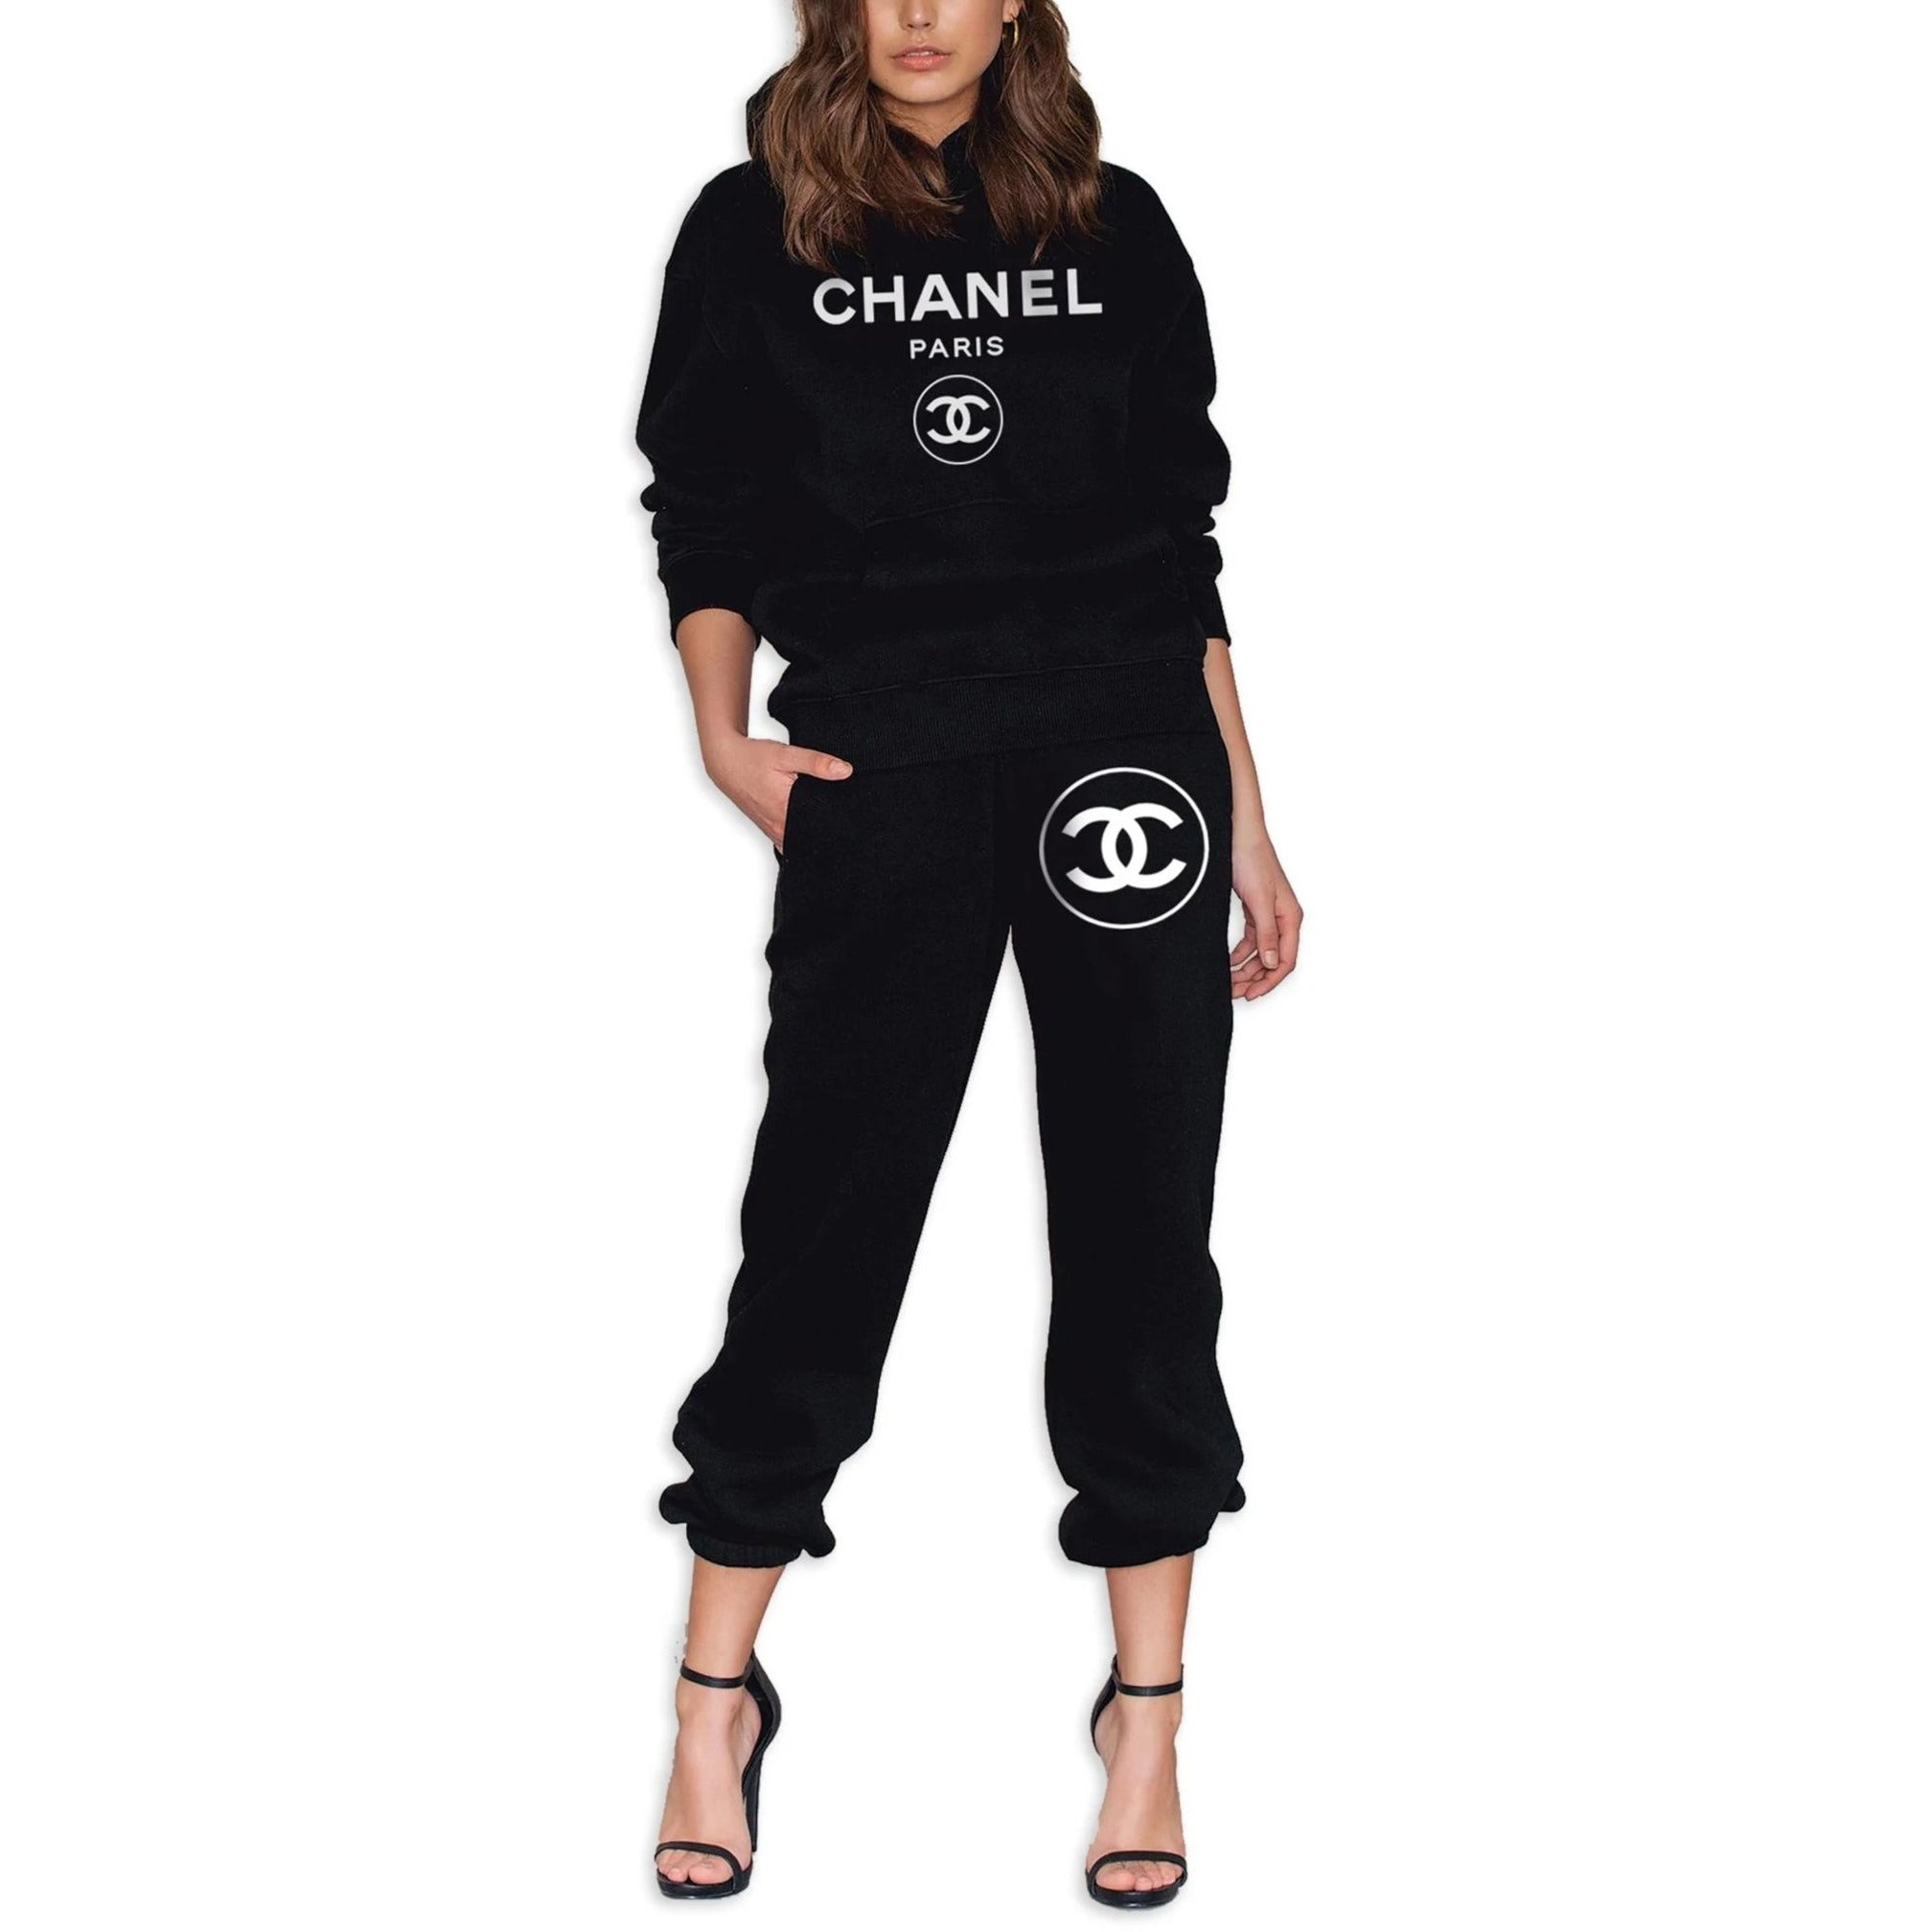 Chanel Sets Pharrell Collaboration For Colette Fashion T-Shirt - Binteez